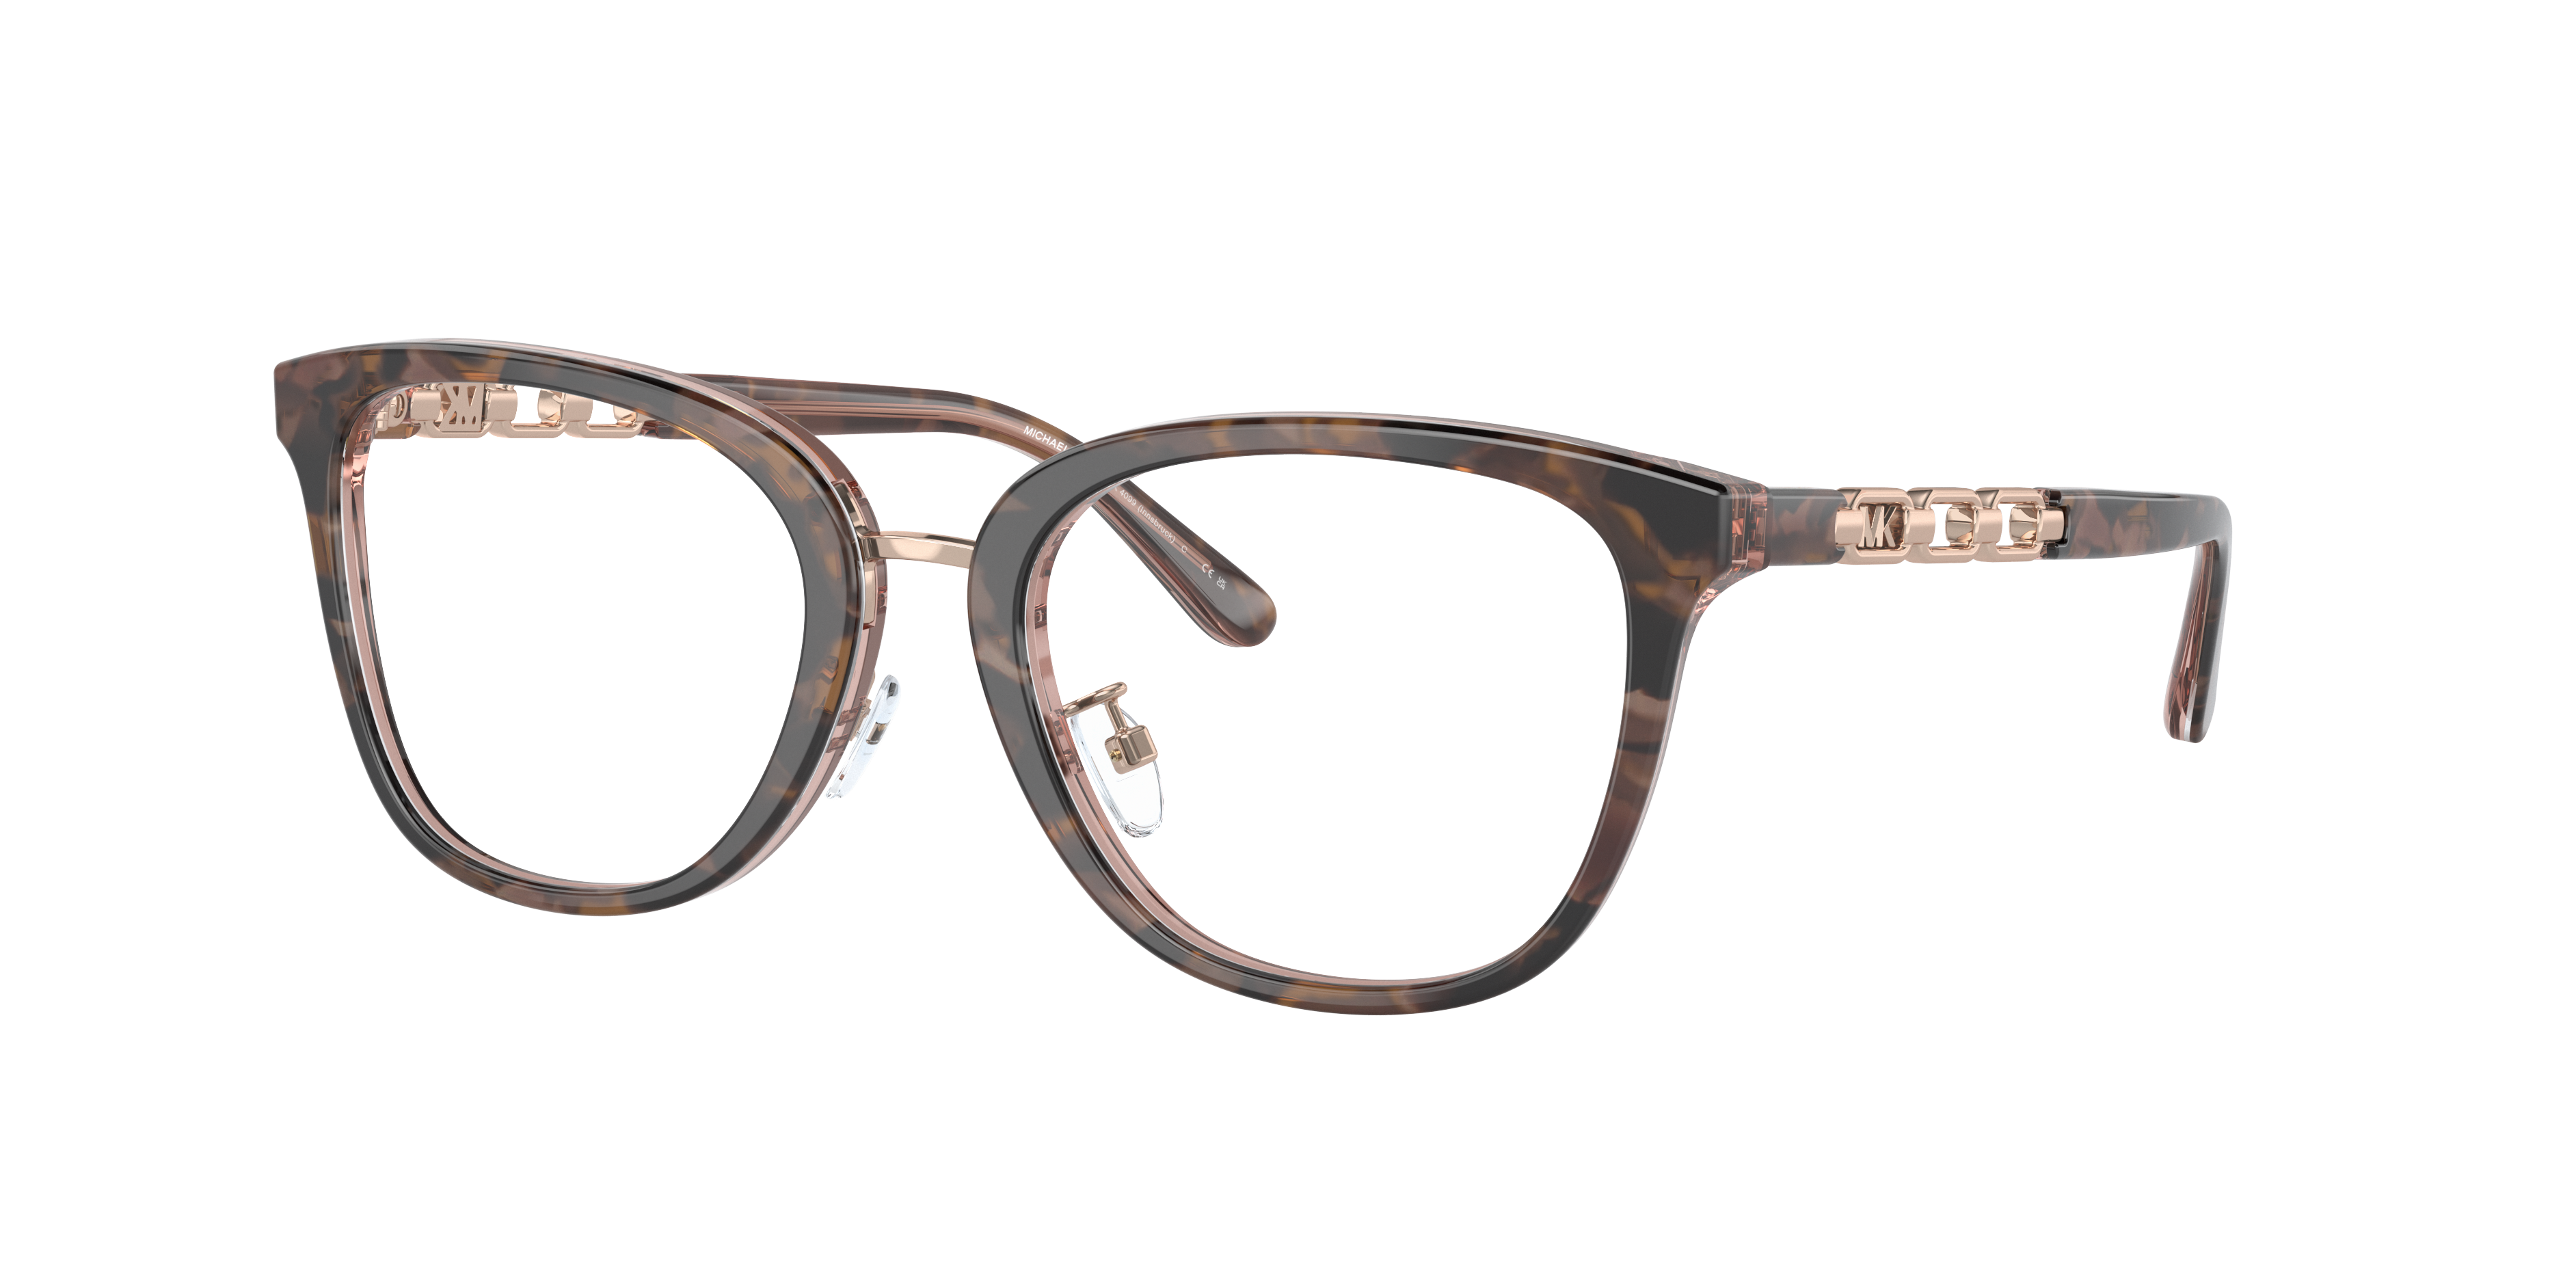 Michael Kors Eyeglasses BuenaVista MK3030 1108 Rose Gold 5417140mm   EyeSpecscom